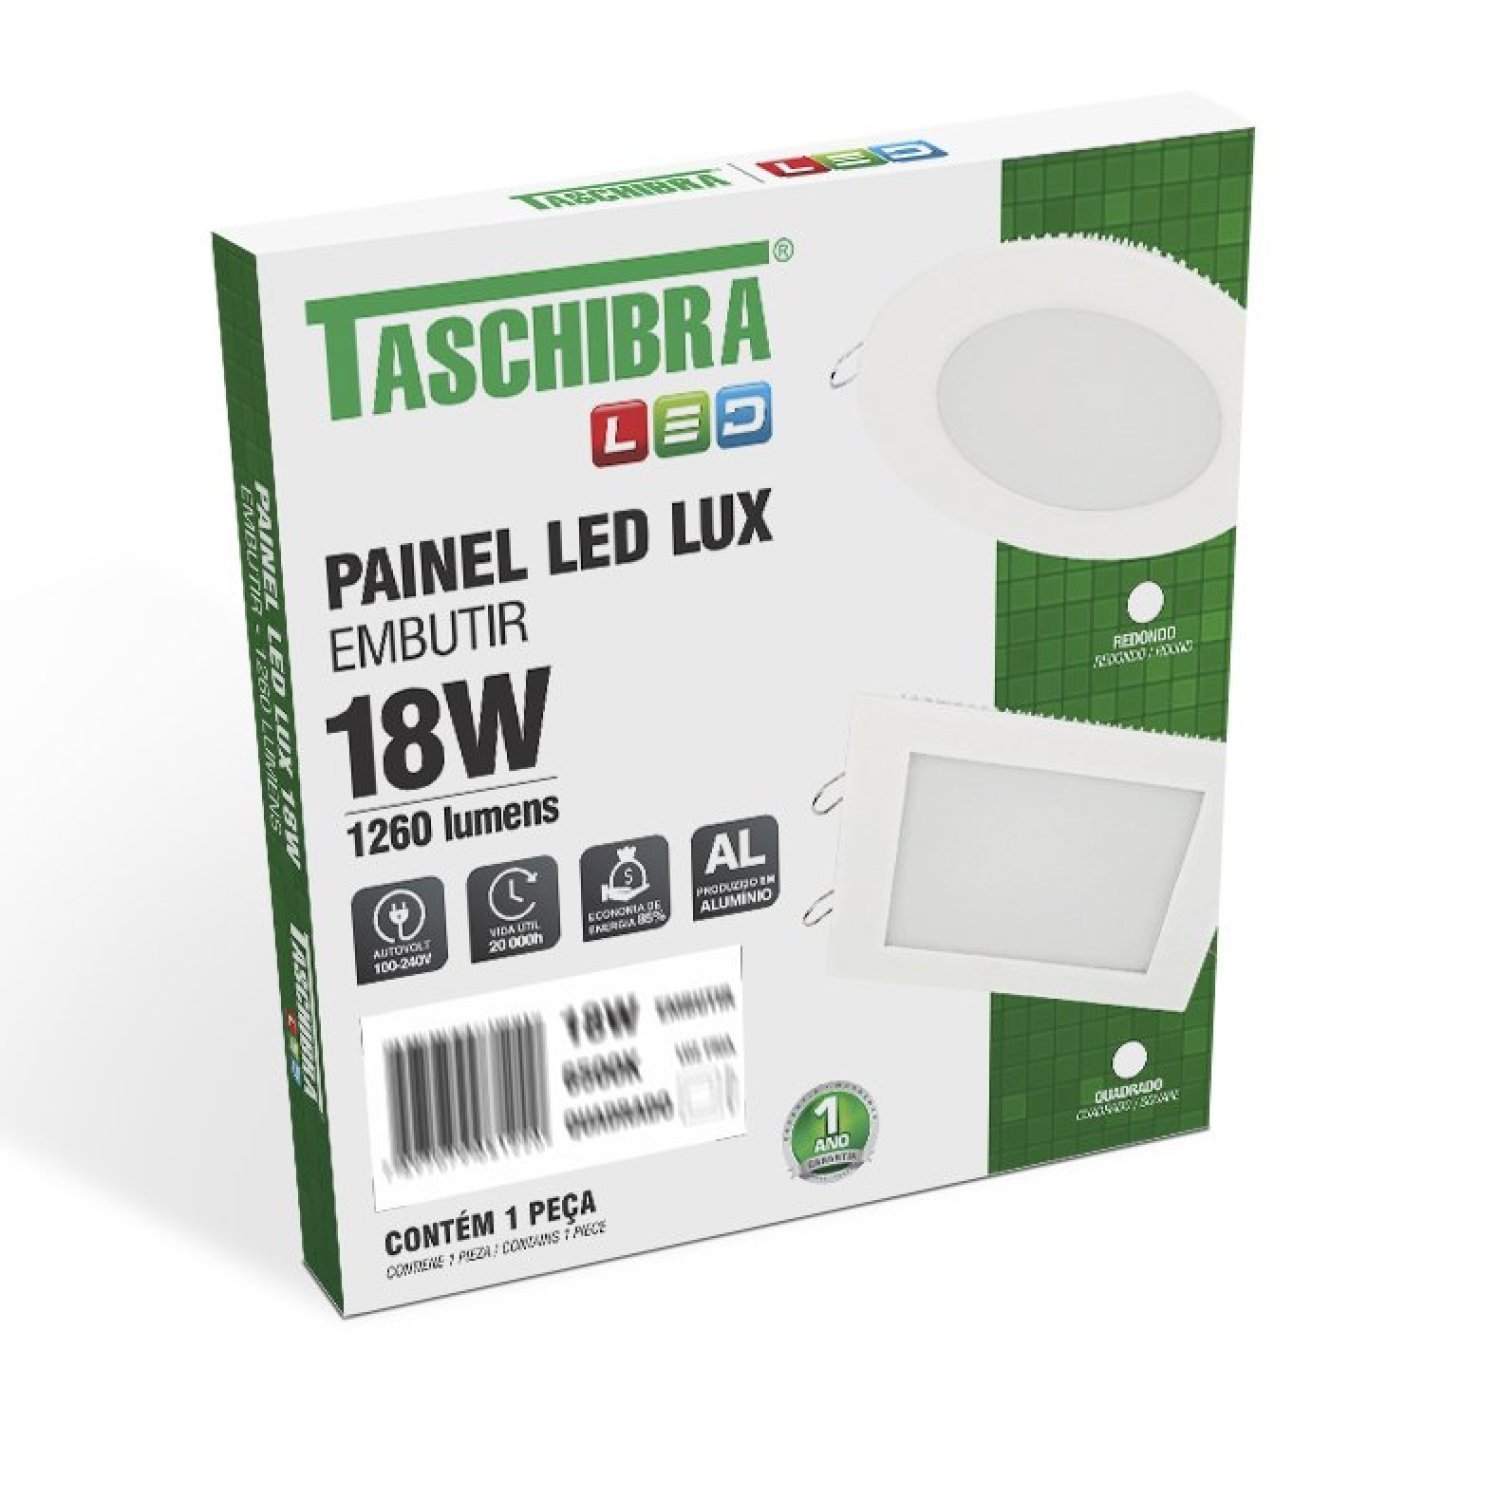 Painel LED Taschibra 18w Lux Quadrado Embutir 4000k Taschibra - 2